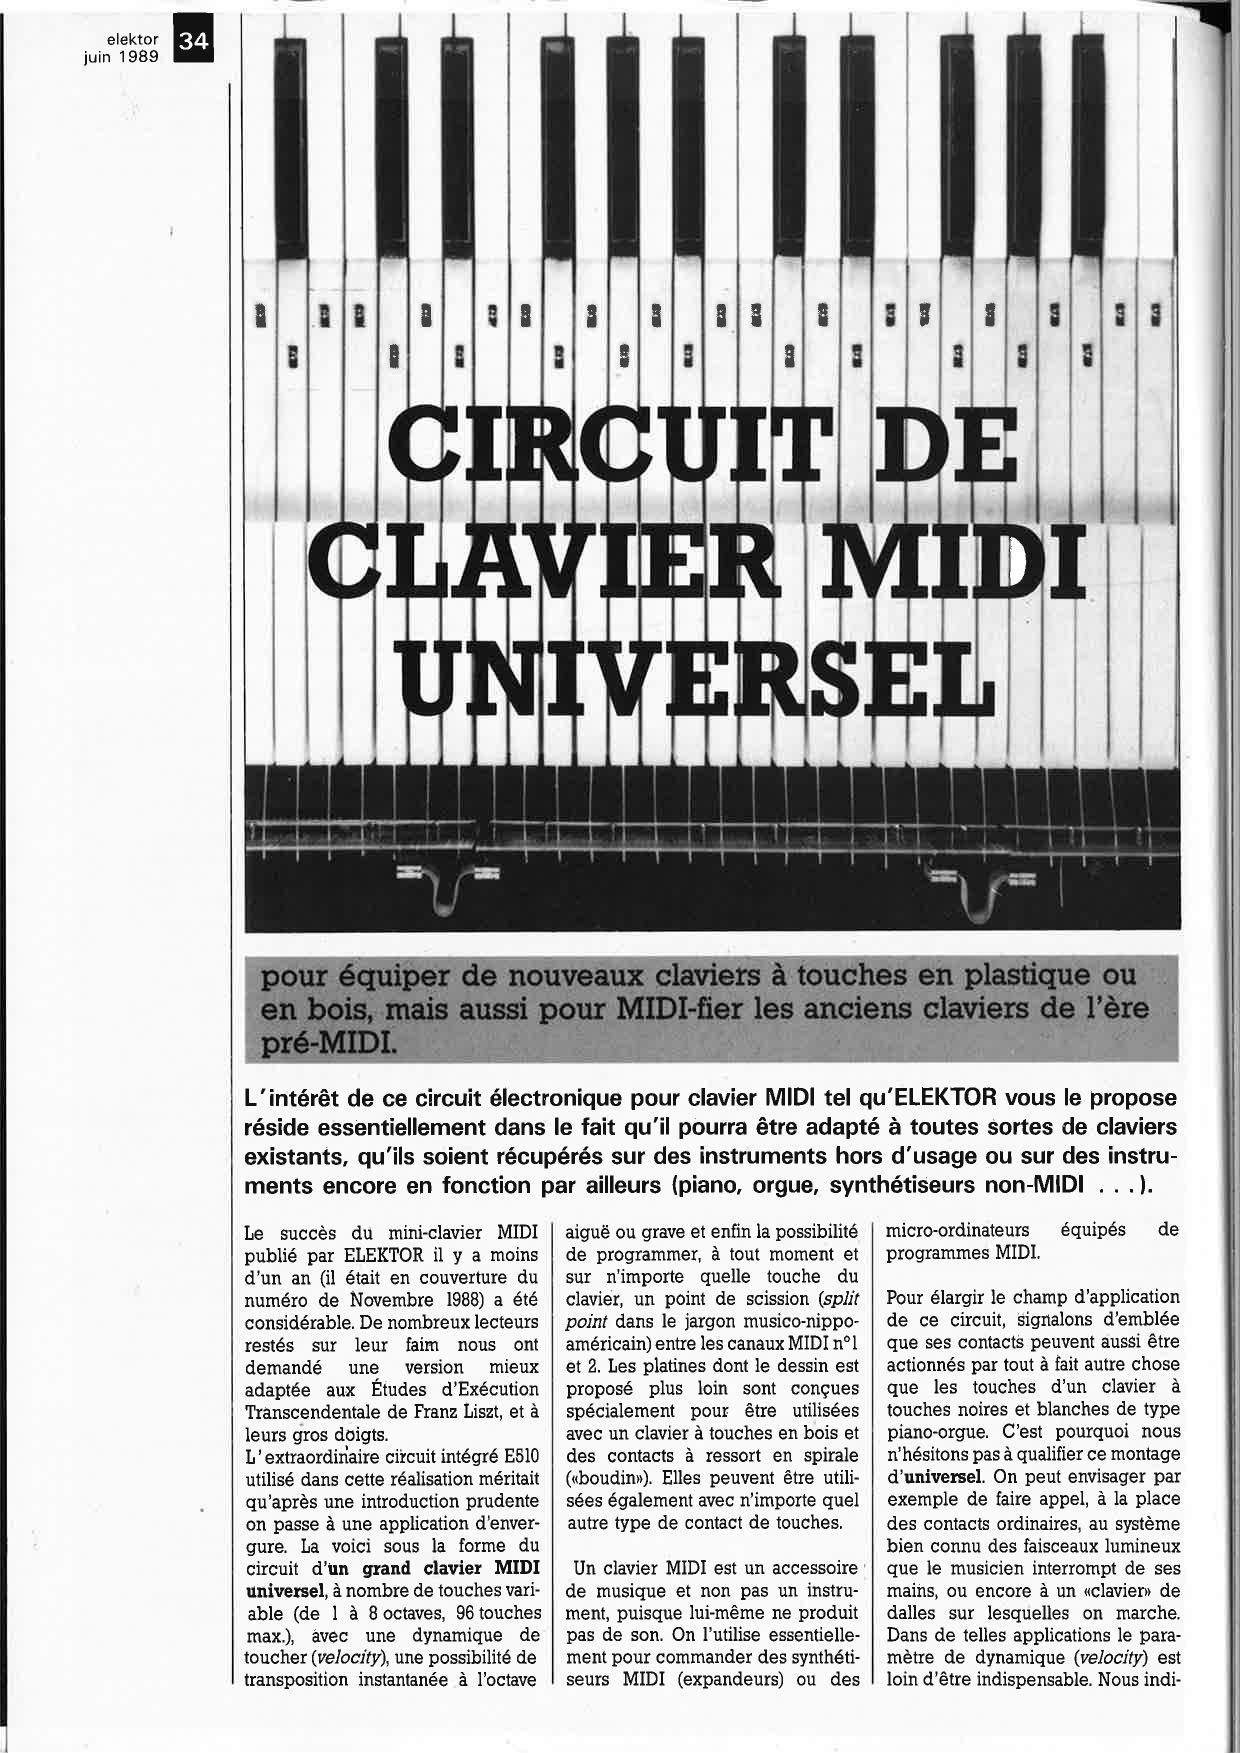 CIRCUIT DE CLAVIER MIDI UNIVERSEL